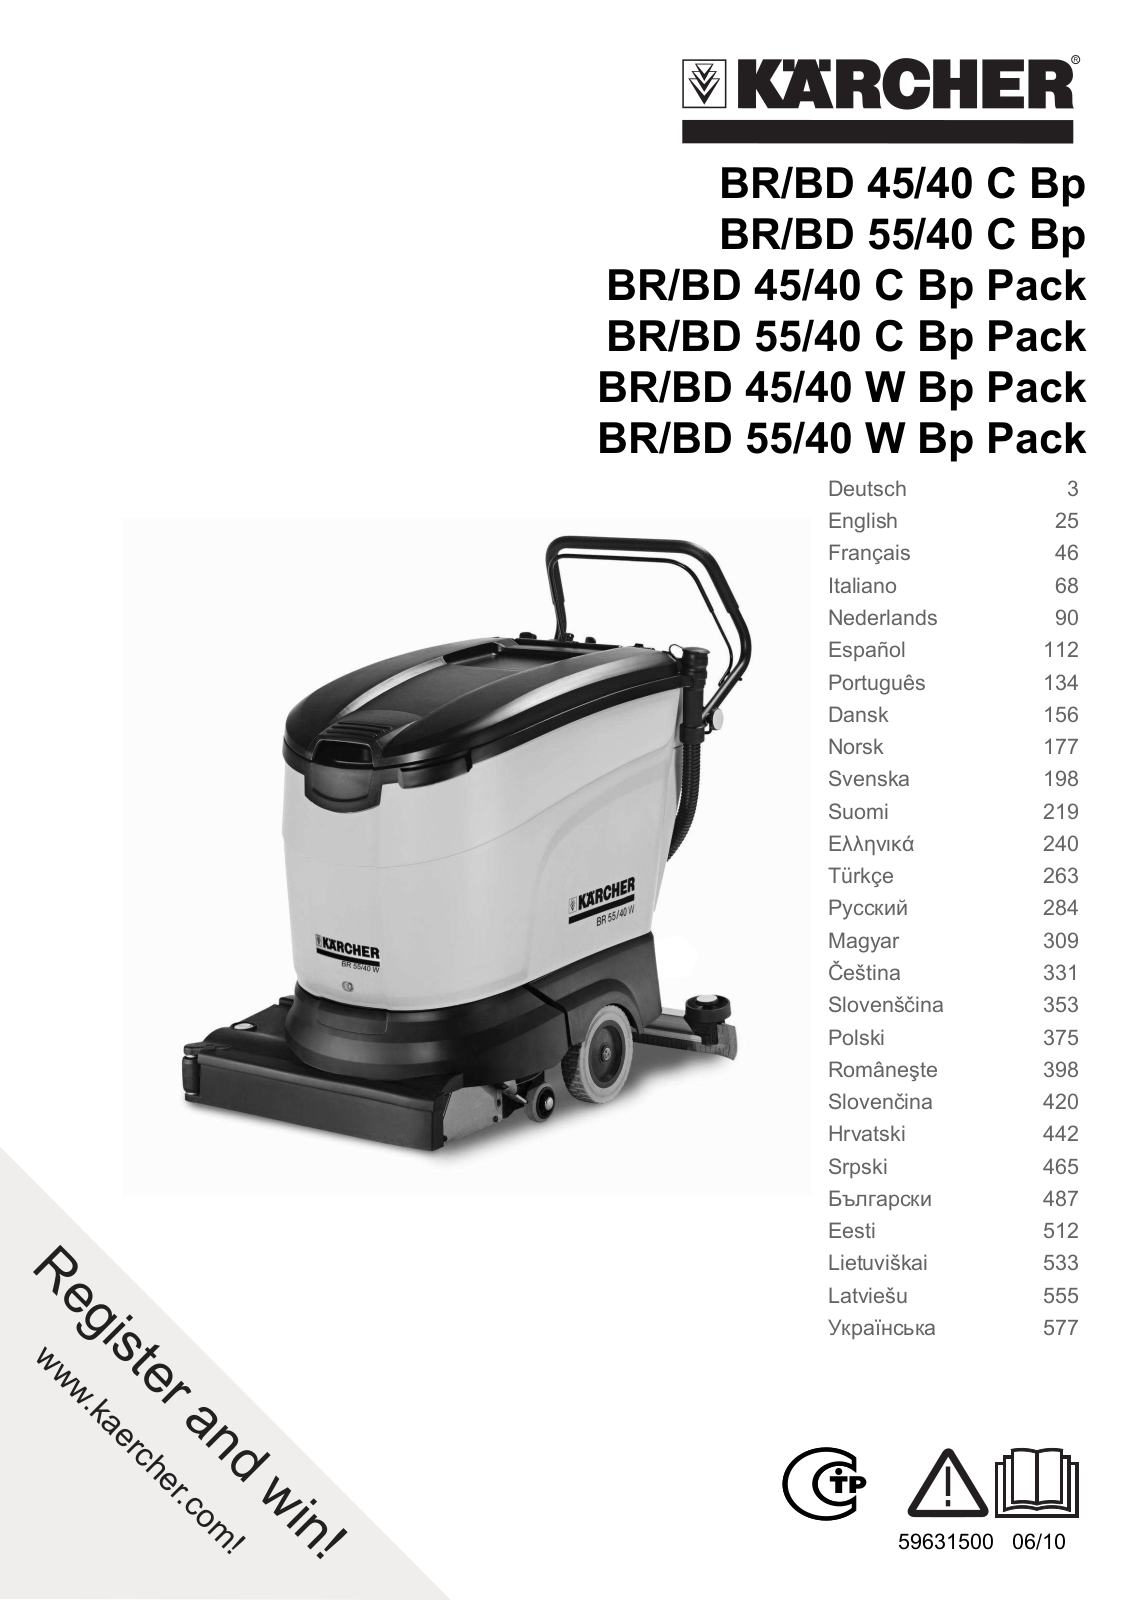 Karcher BD 55/40 W Bp Pack DOSE User Manual